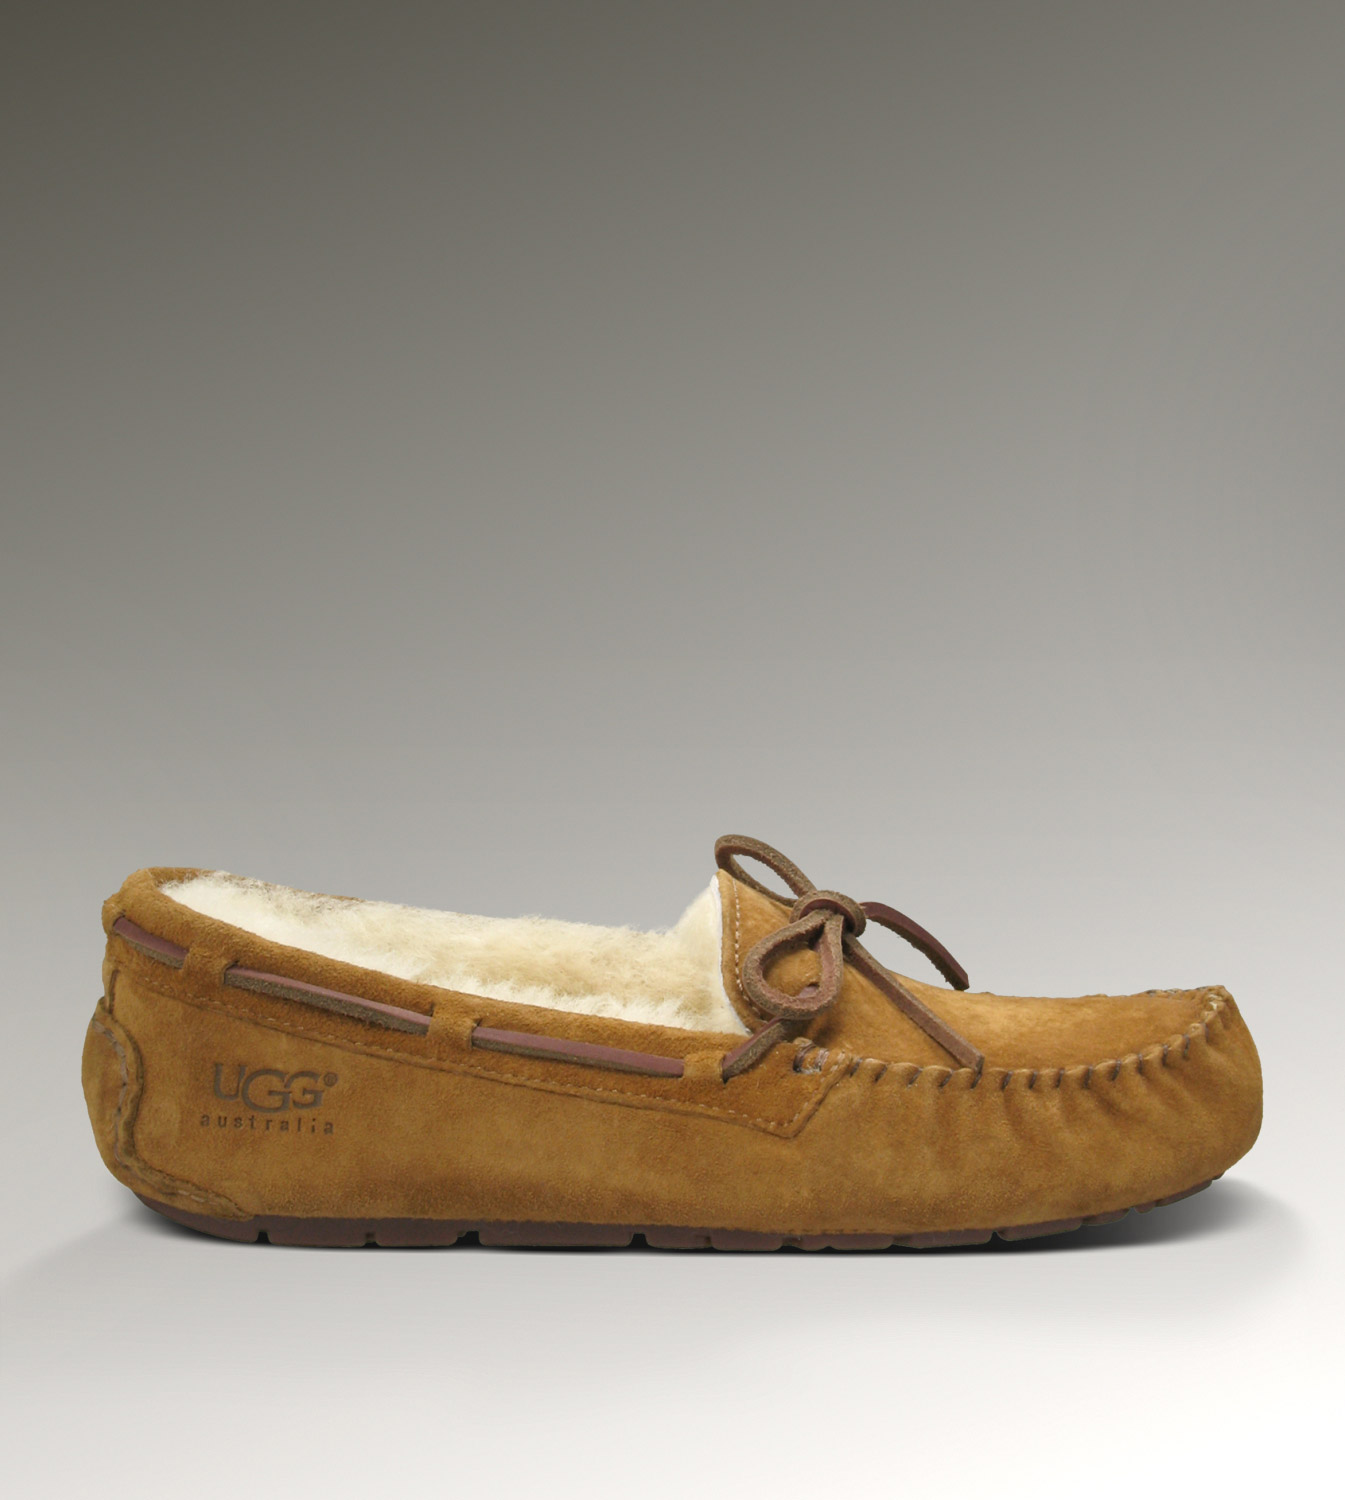 UGG Dakota 5612 Castagno pantofole